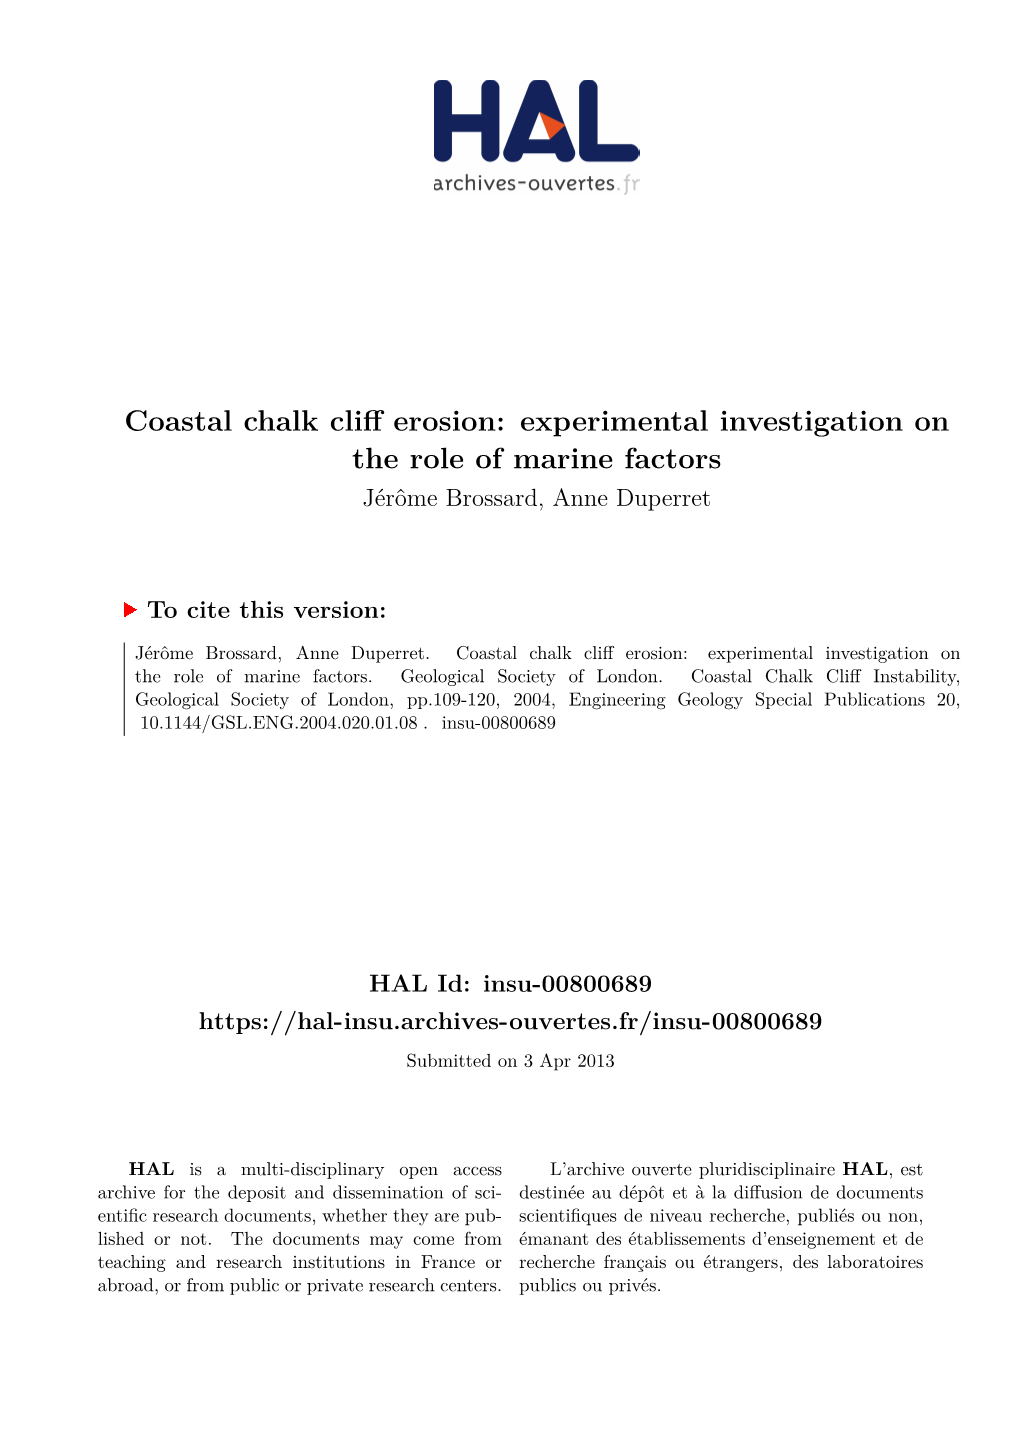 Coastal Chalk Cliff Erosion: Experimental Investigation on the Role of Marine Factors Jérôme Brossard, Anne Duperret